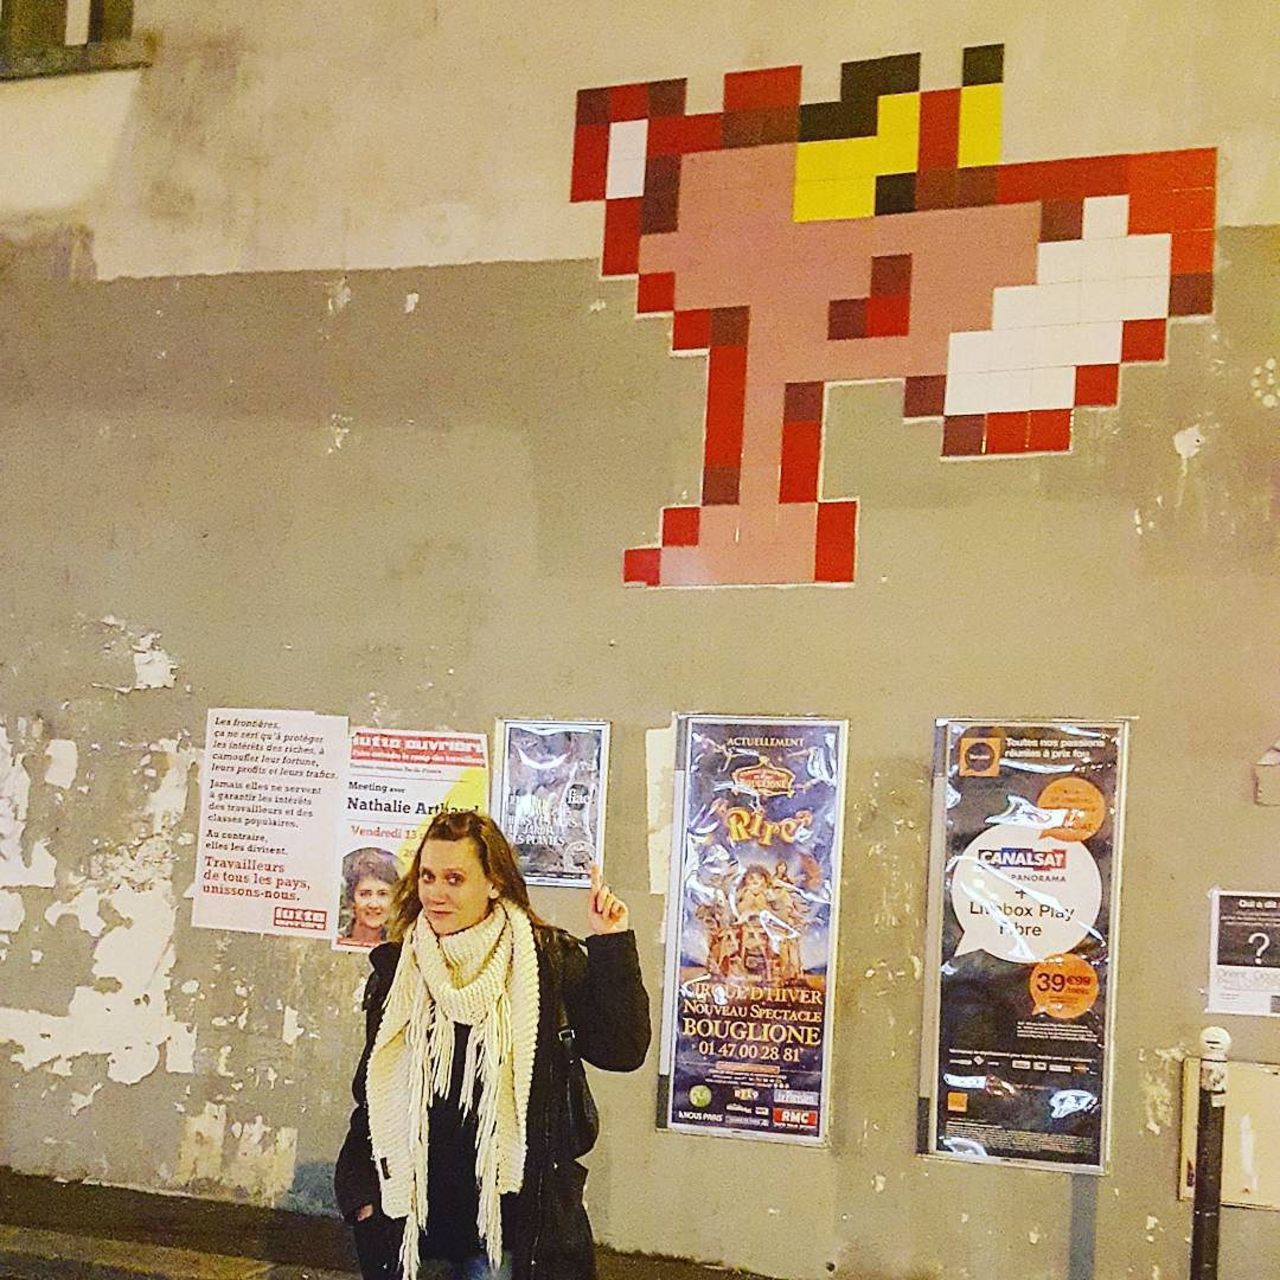 #Paris #graffiti photo by @beabookingstories http://ift.tt/1LxZKji #StreetArt https://t.co/ZzxD9tbIAJ